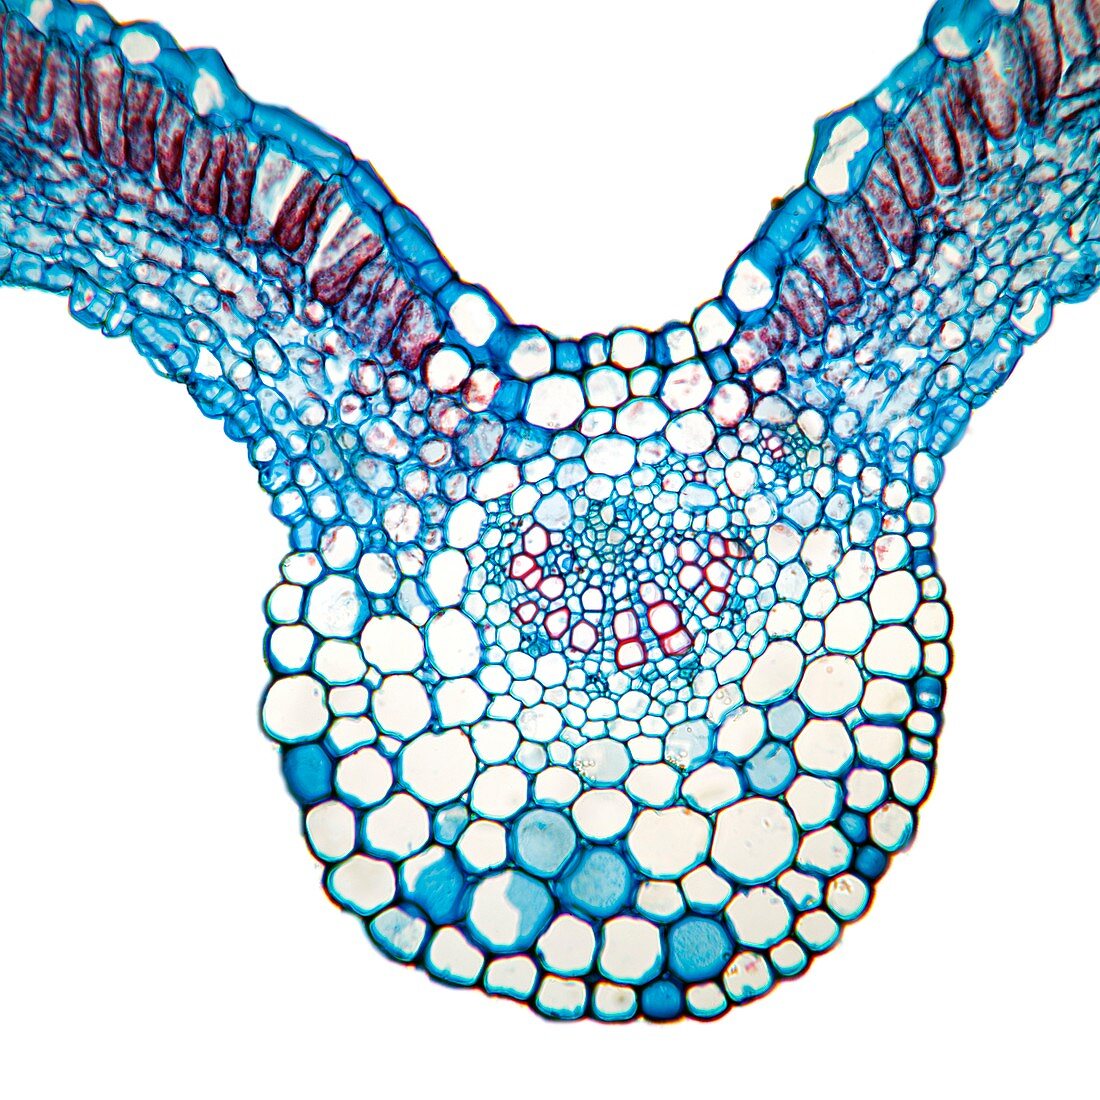 Meadow-beauty leaf,light micrograph